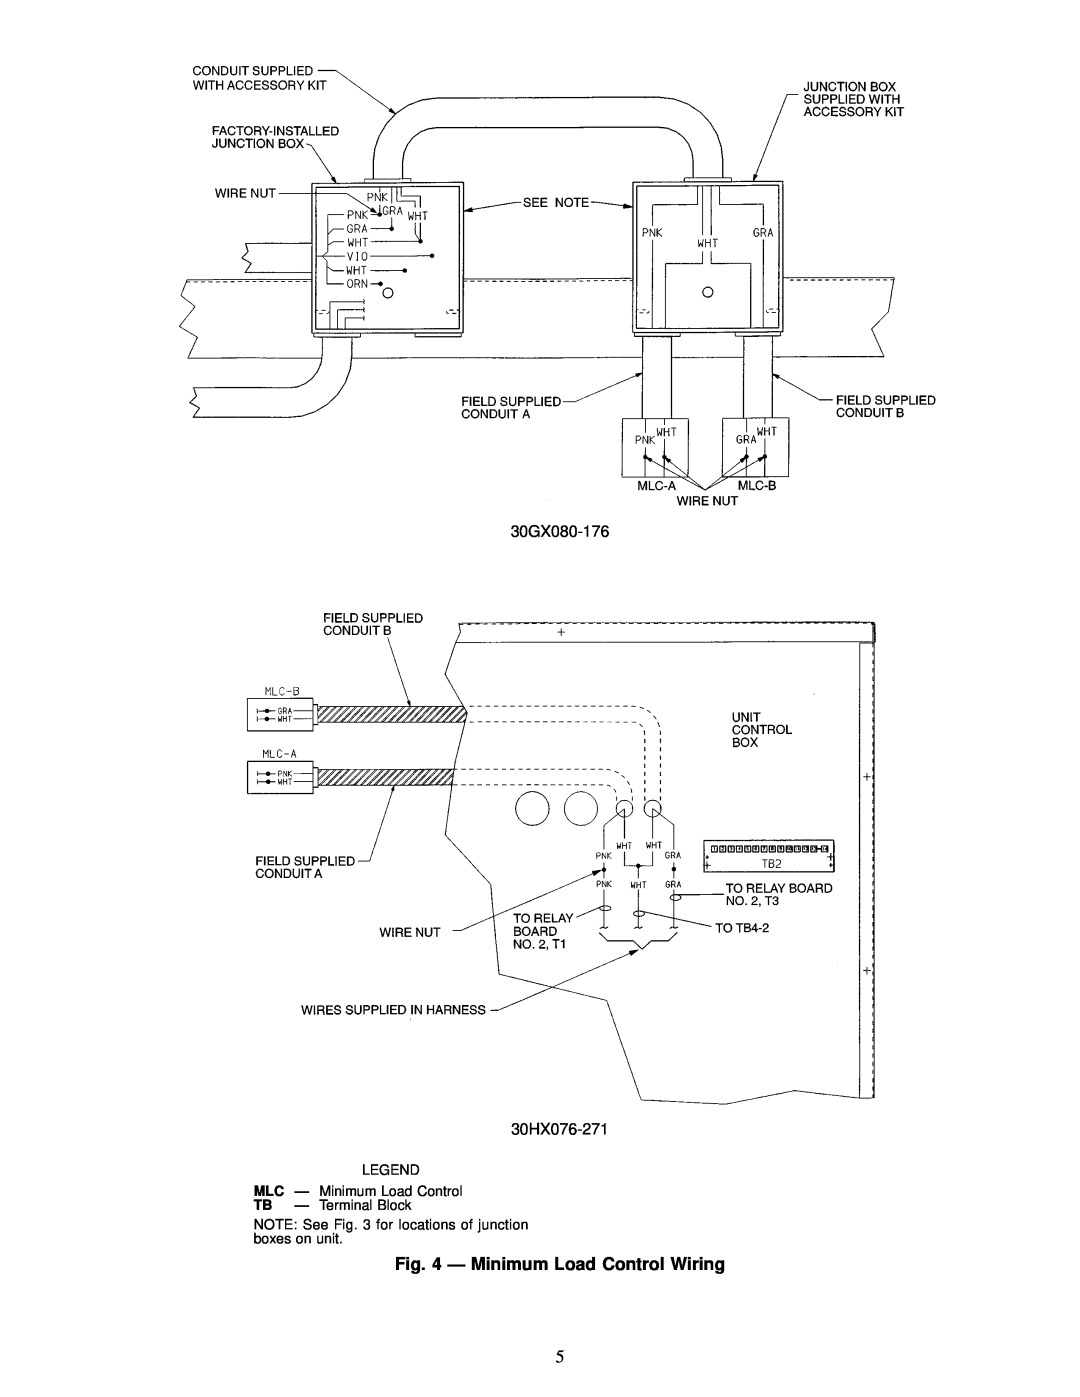 Carrier installation instructions Ð Minimum Load Control Wiring, 30GX080-176 30HX076-271 